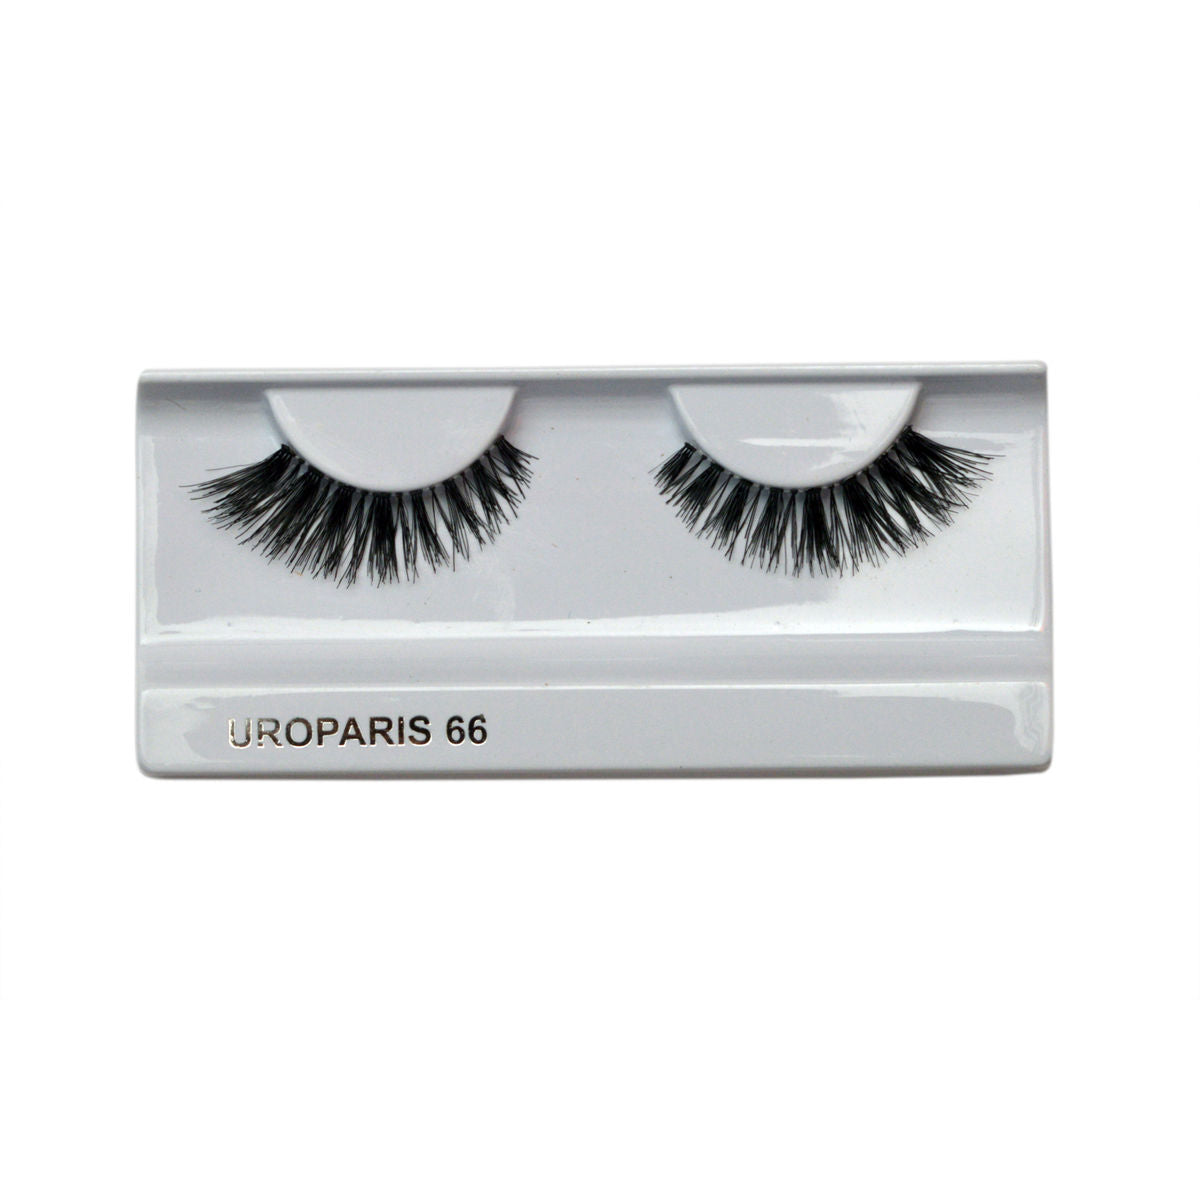 Uroparis Eyelashes 66 Black (1 pair) Uroparis